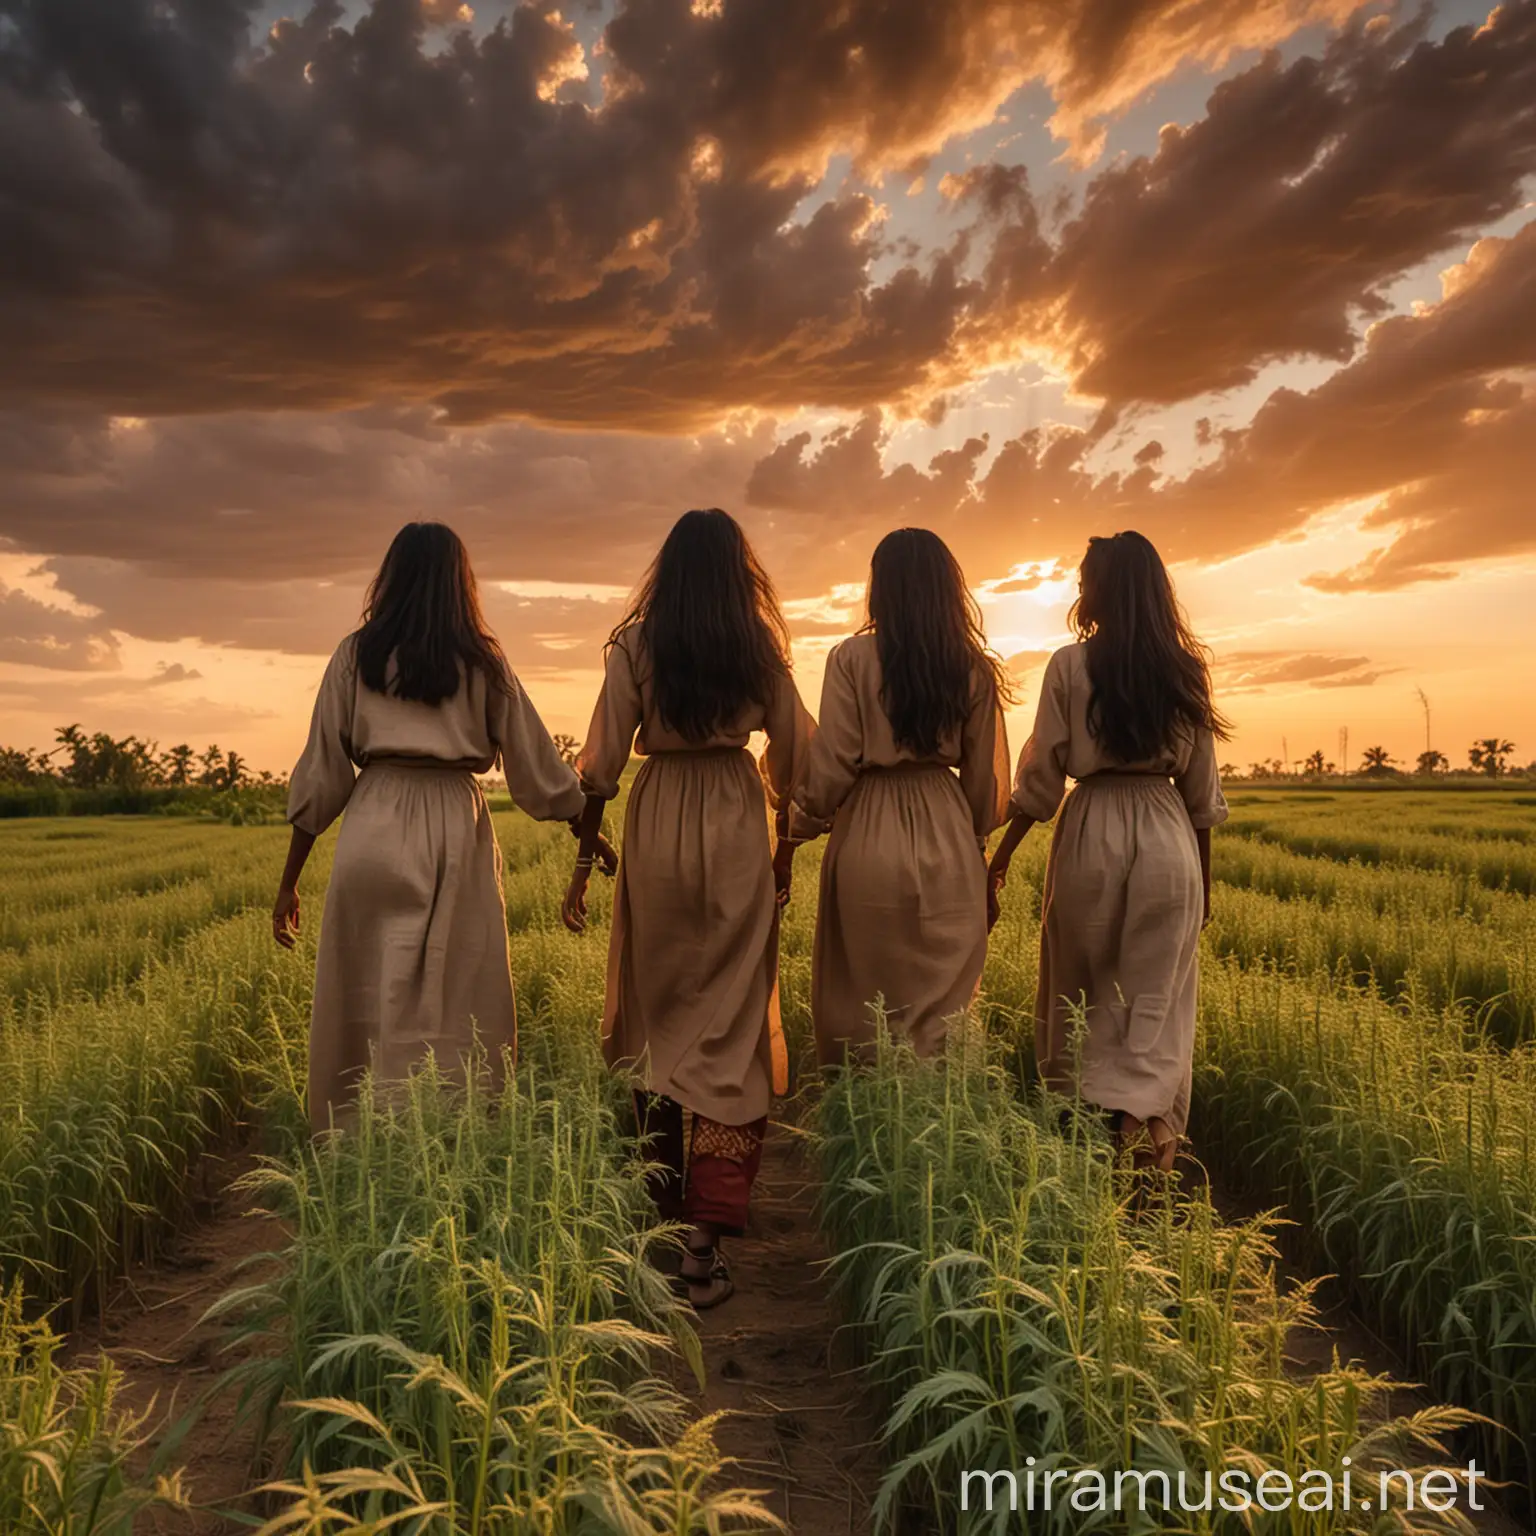 South Asian Women in Hemp Fields at Sunset